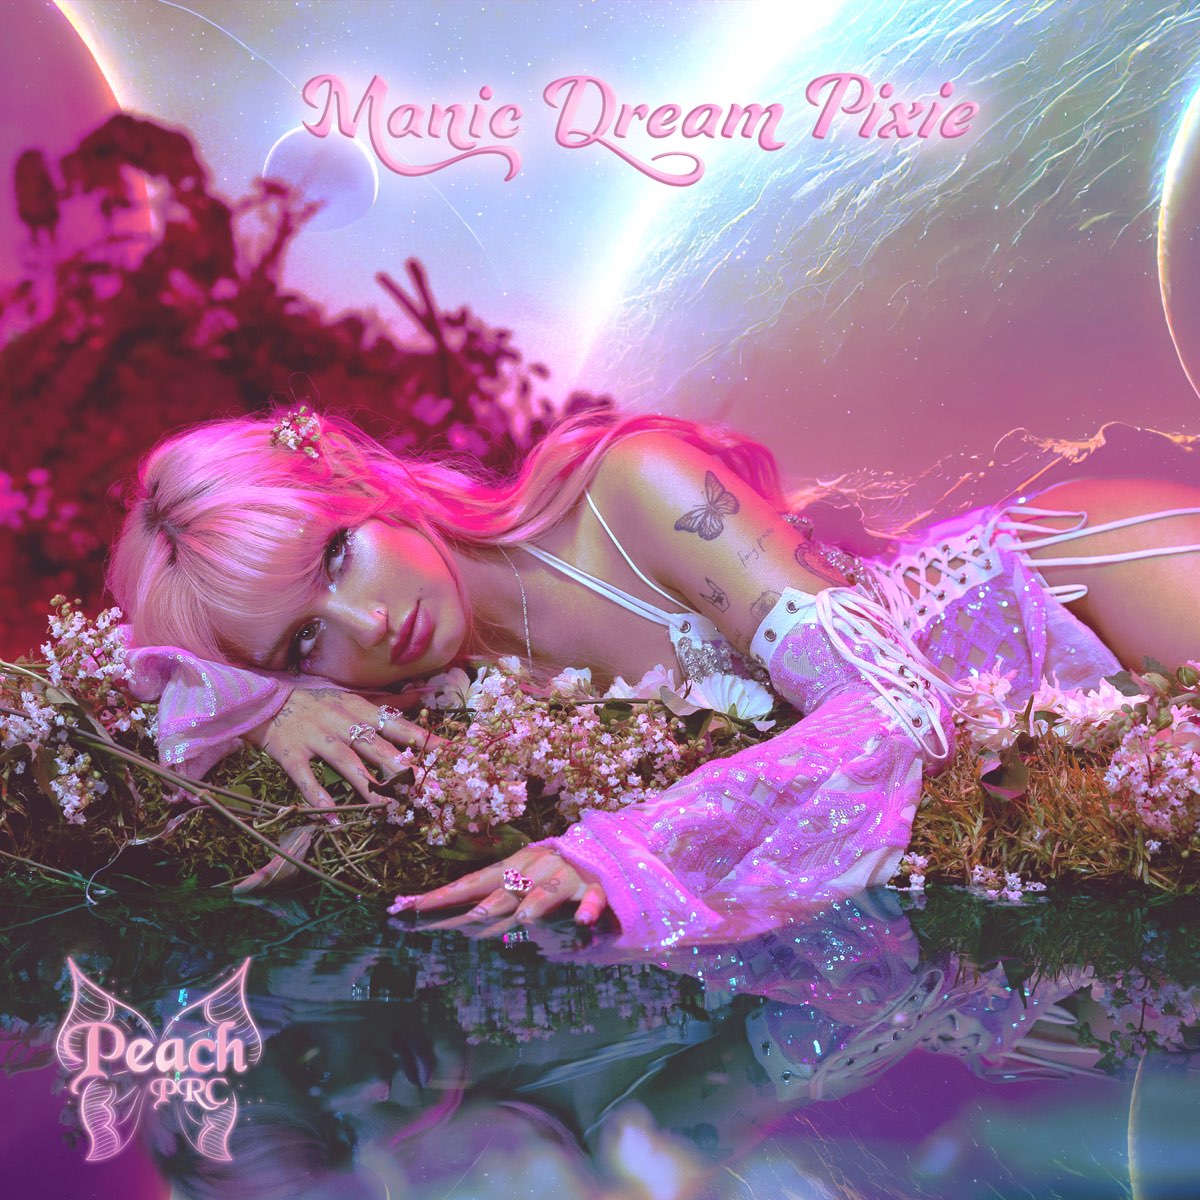 Manic Pixie Dream review